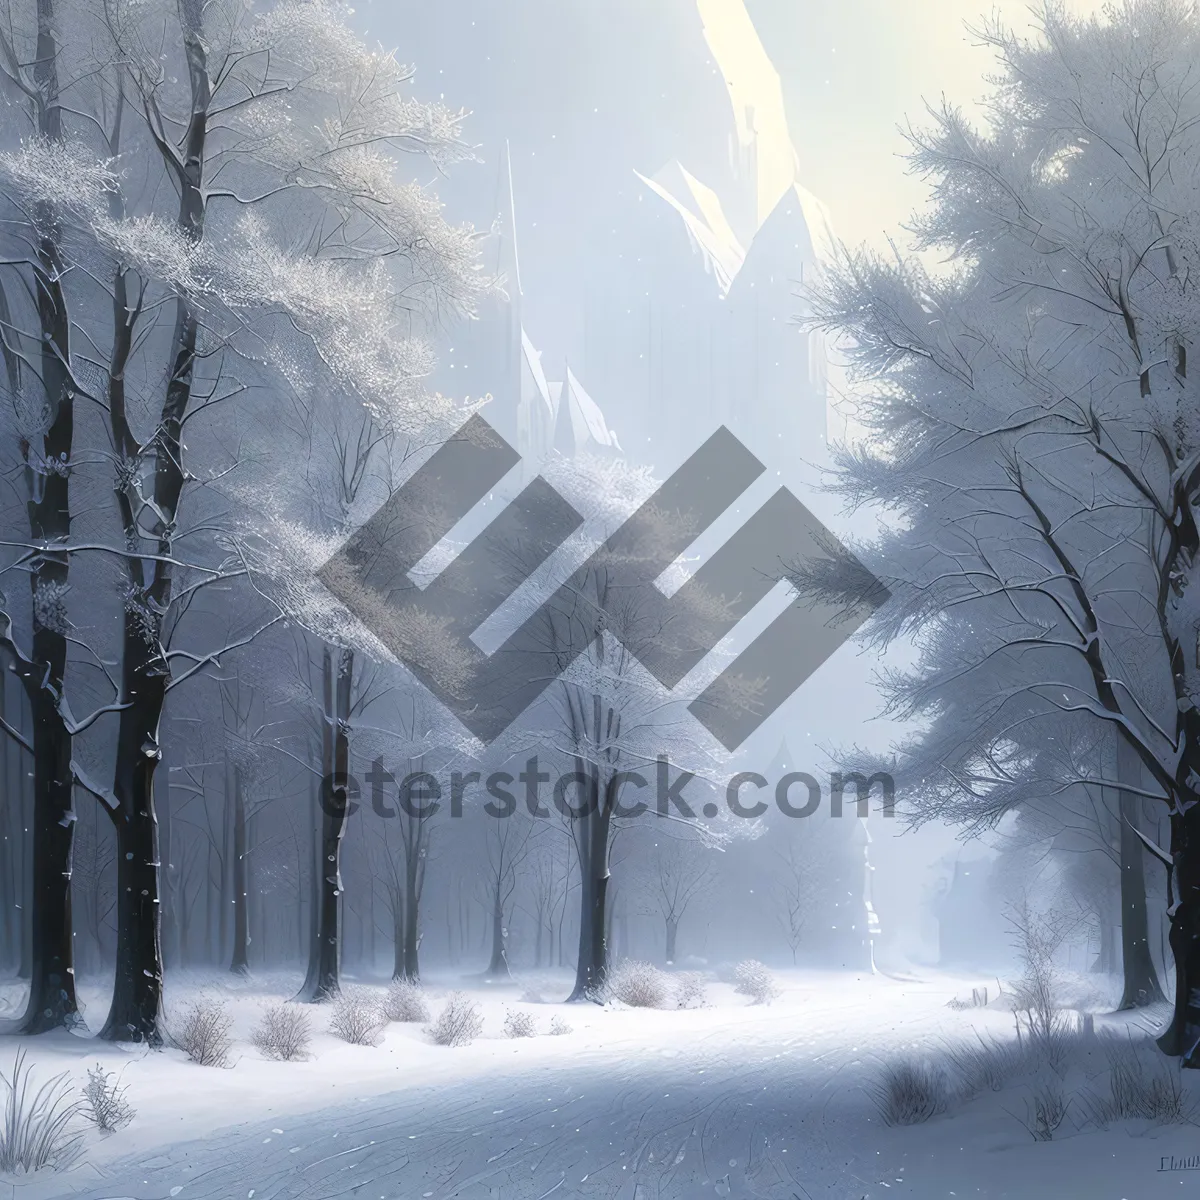 Picture of Winter Wonderland: Snowy Forest Landscape